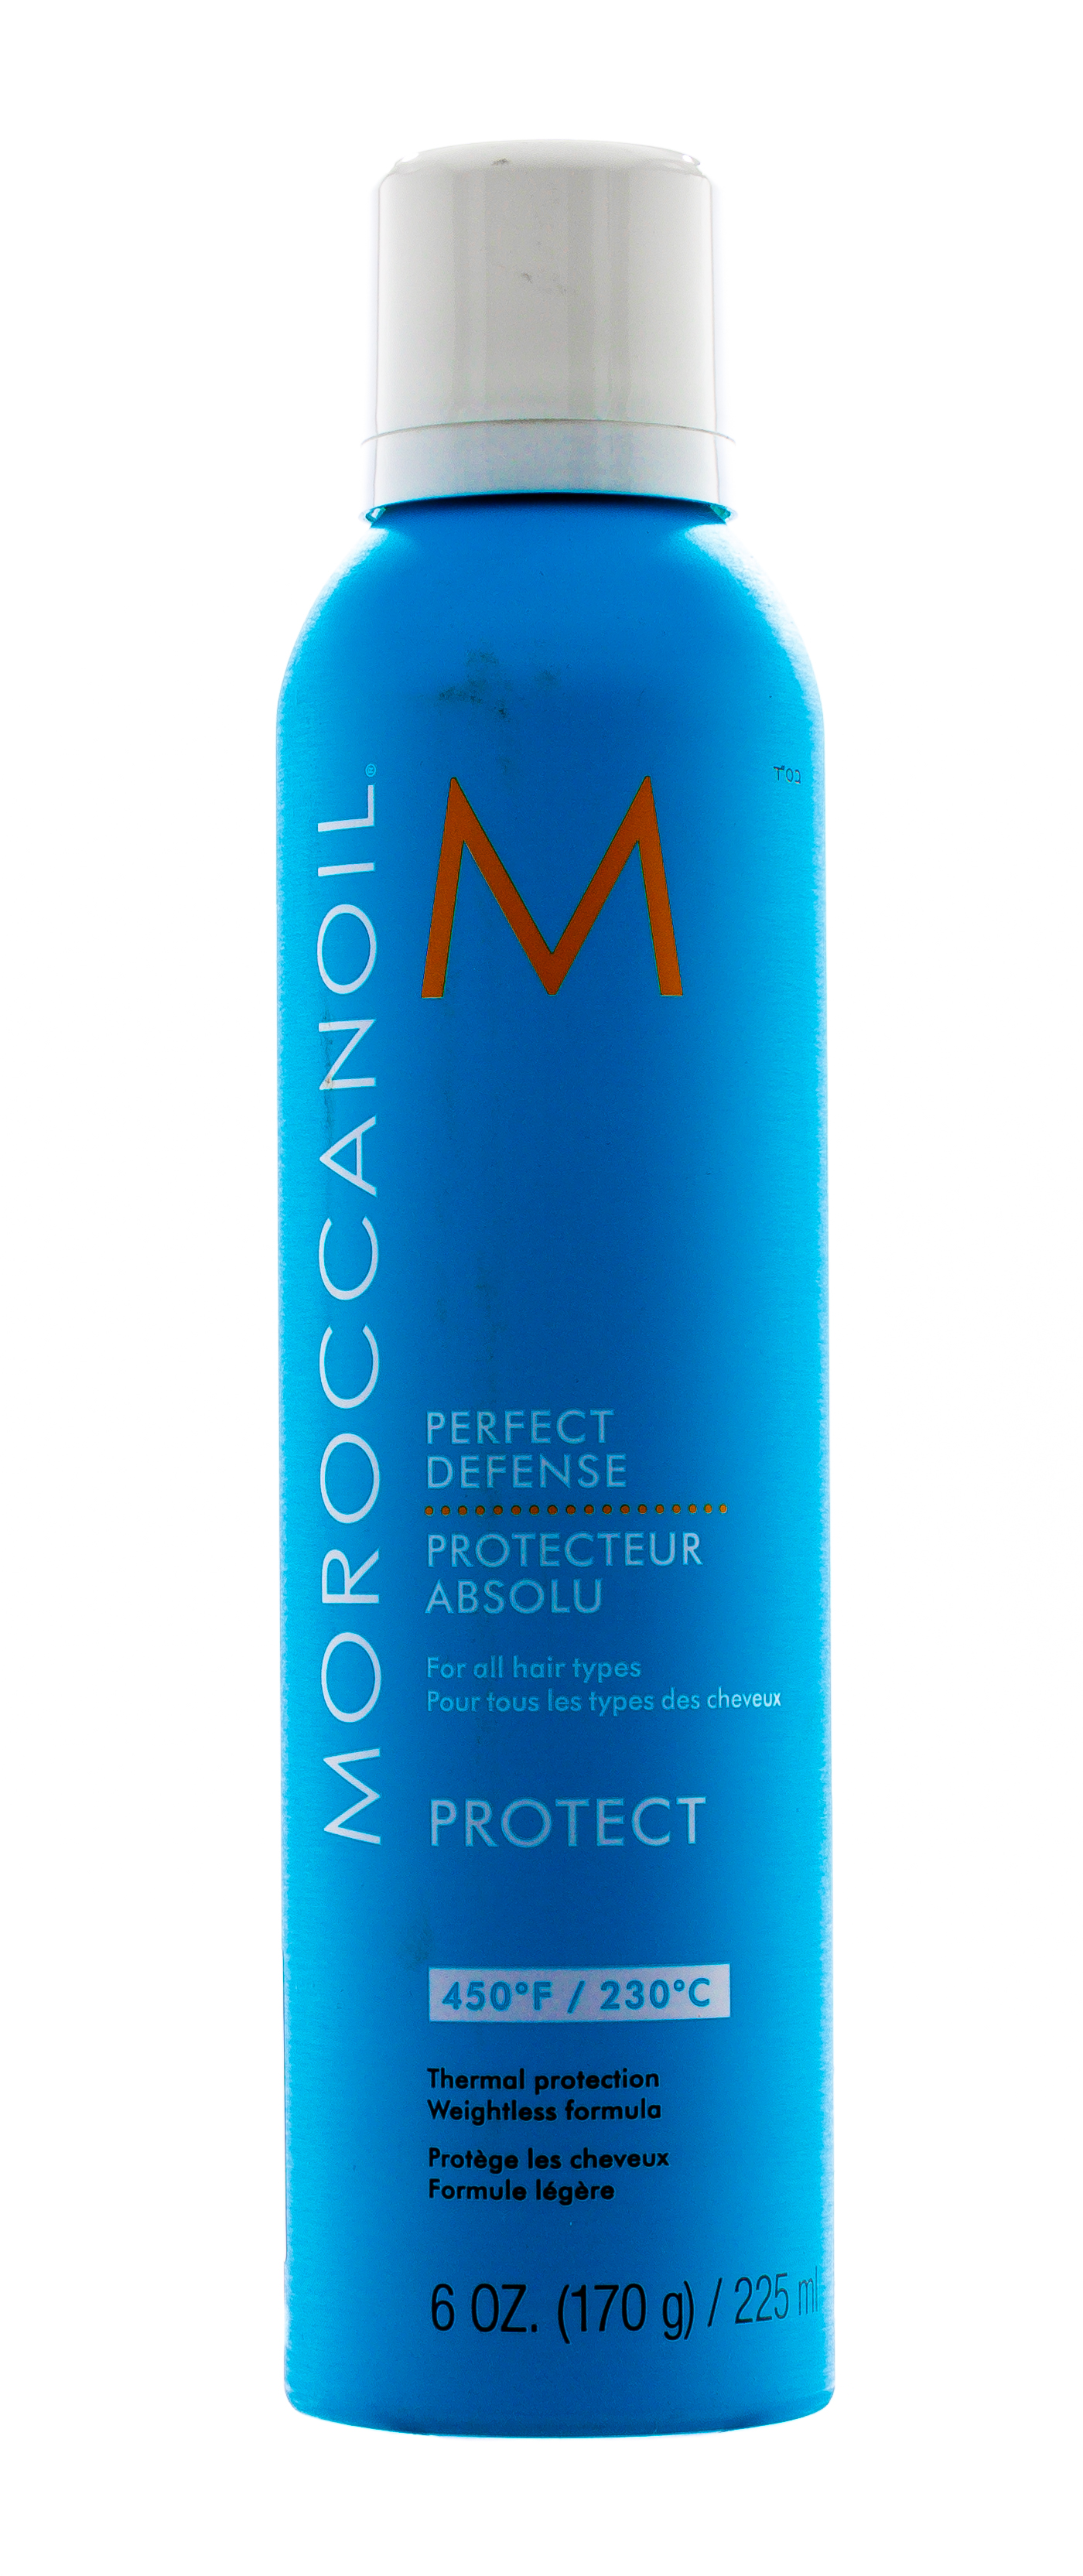 Moroccanoil Лосьон-спрей для волос Идеальная защита, 225 мл (Moroccanoil, Styling & Finishing)